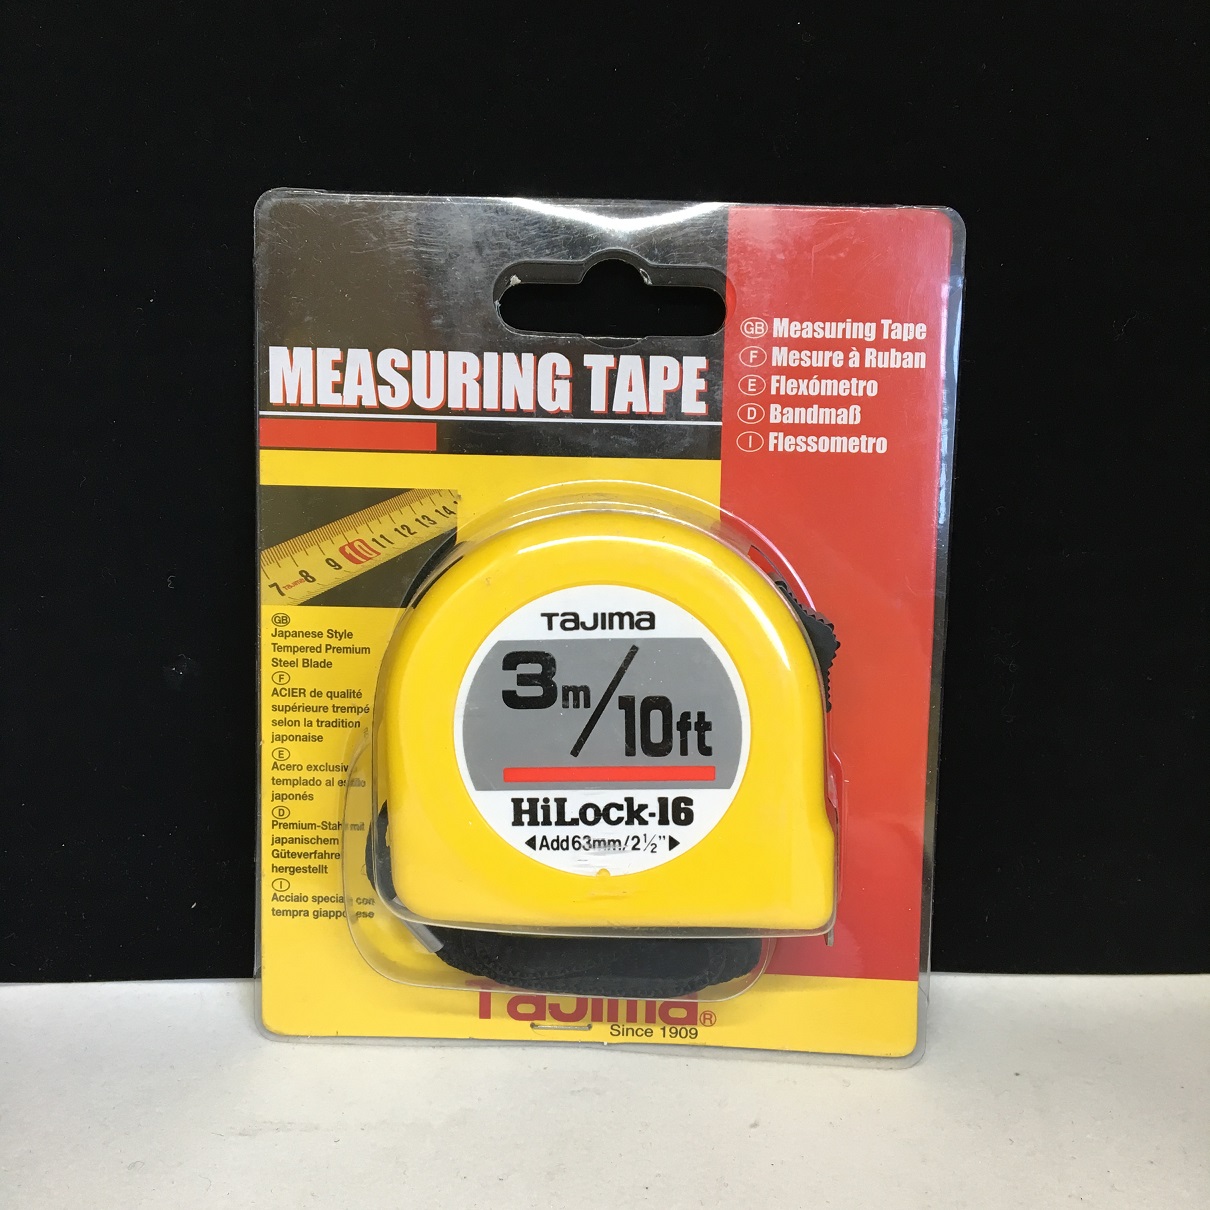 Tajima H5PA0MY Hi Lock Measuring Tape, Yellow, 10 m x 25 mm - Tape Measures  